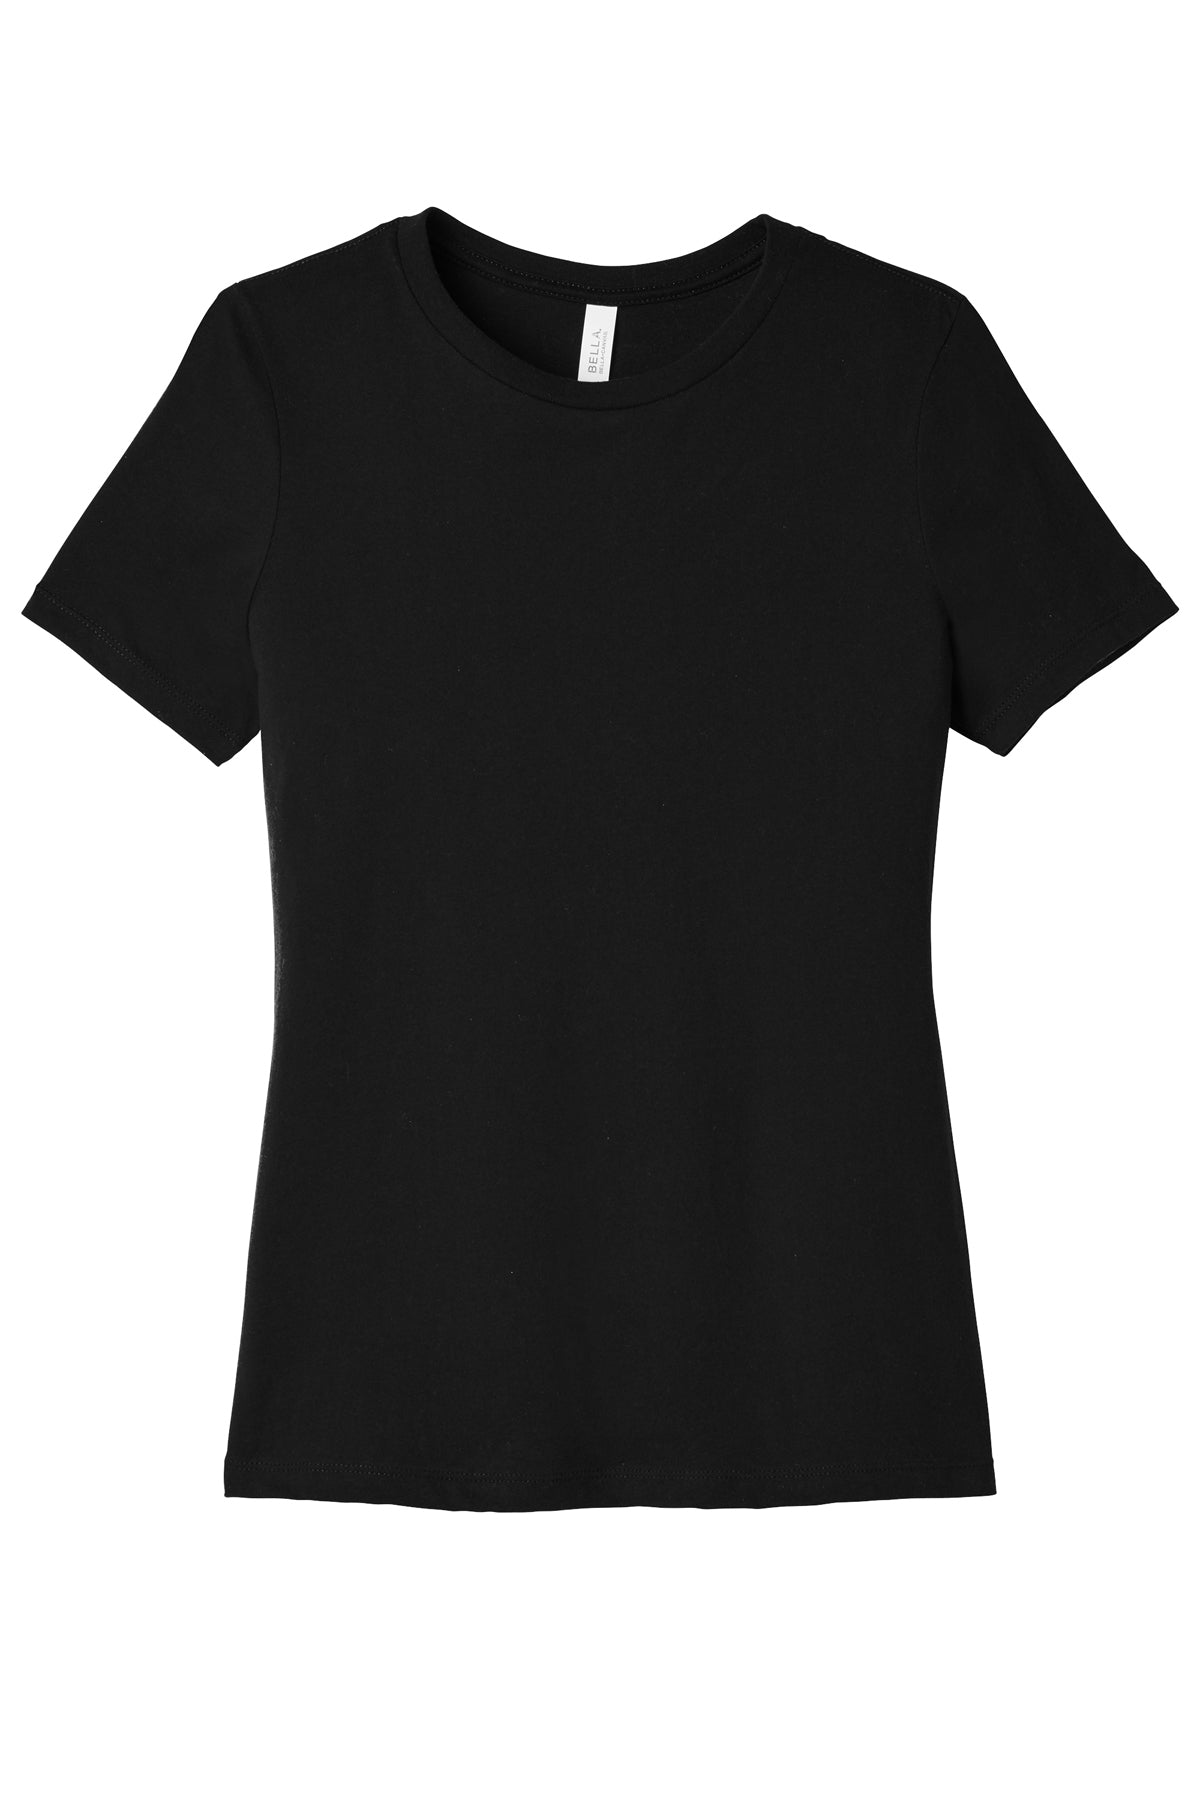 Bella Canvas Womens Cotton Short Sleeve Shirts Black